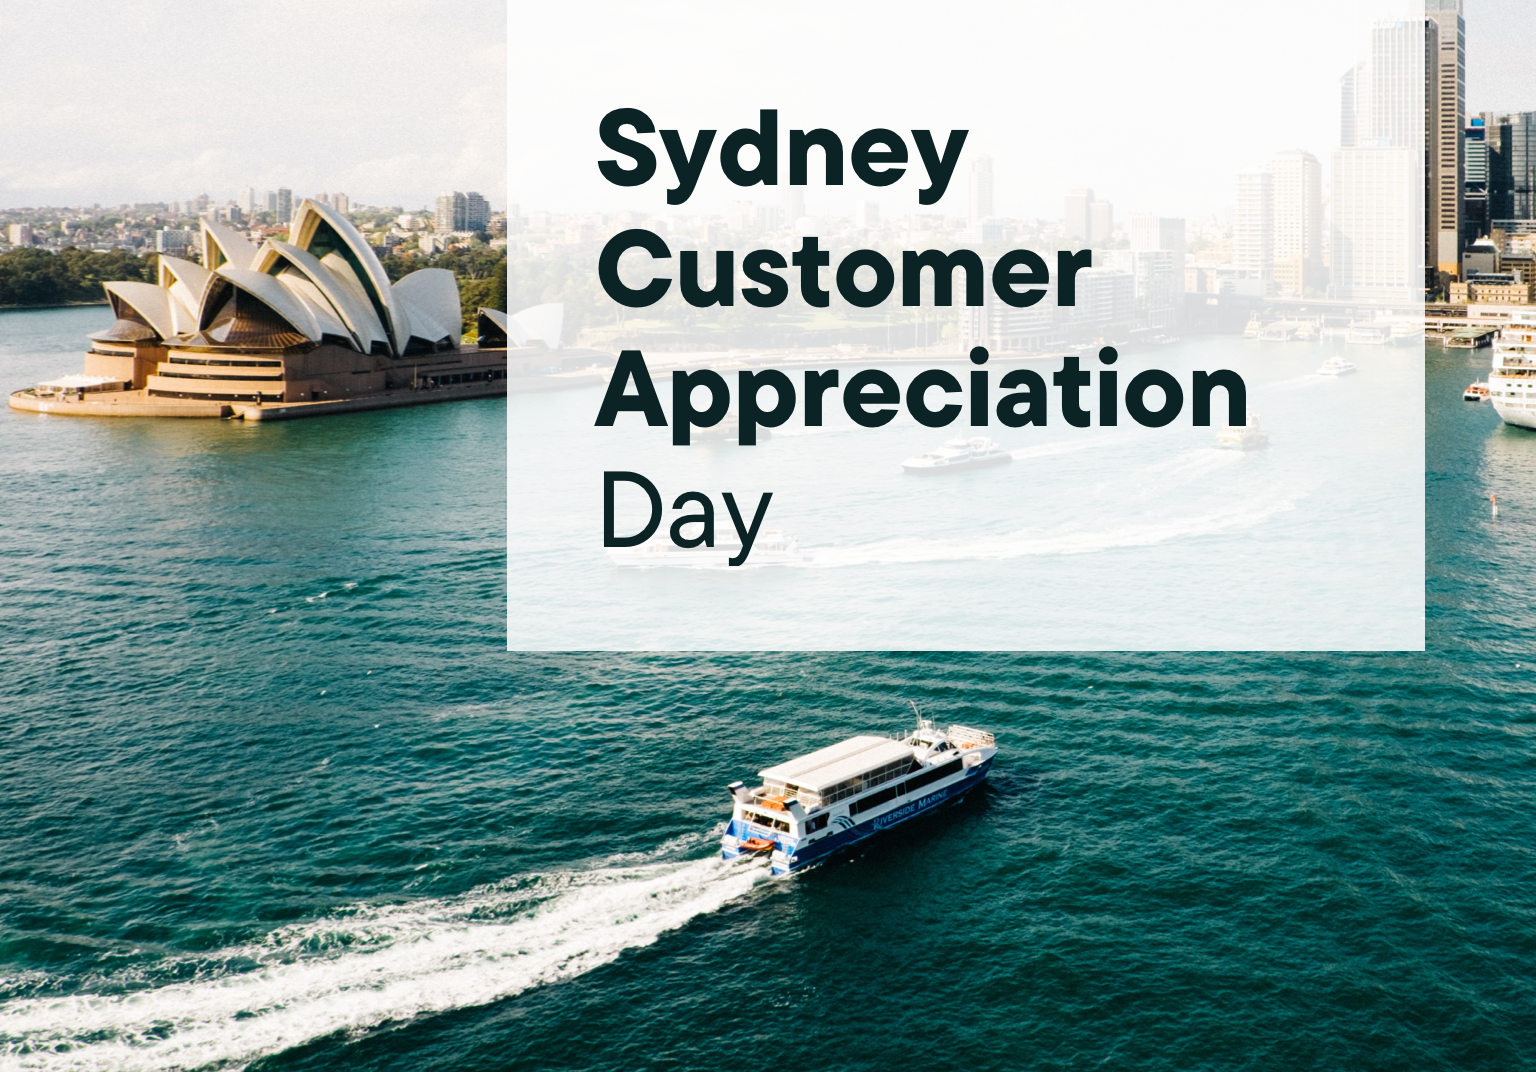 Sydney Customer Appreciation Day